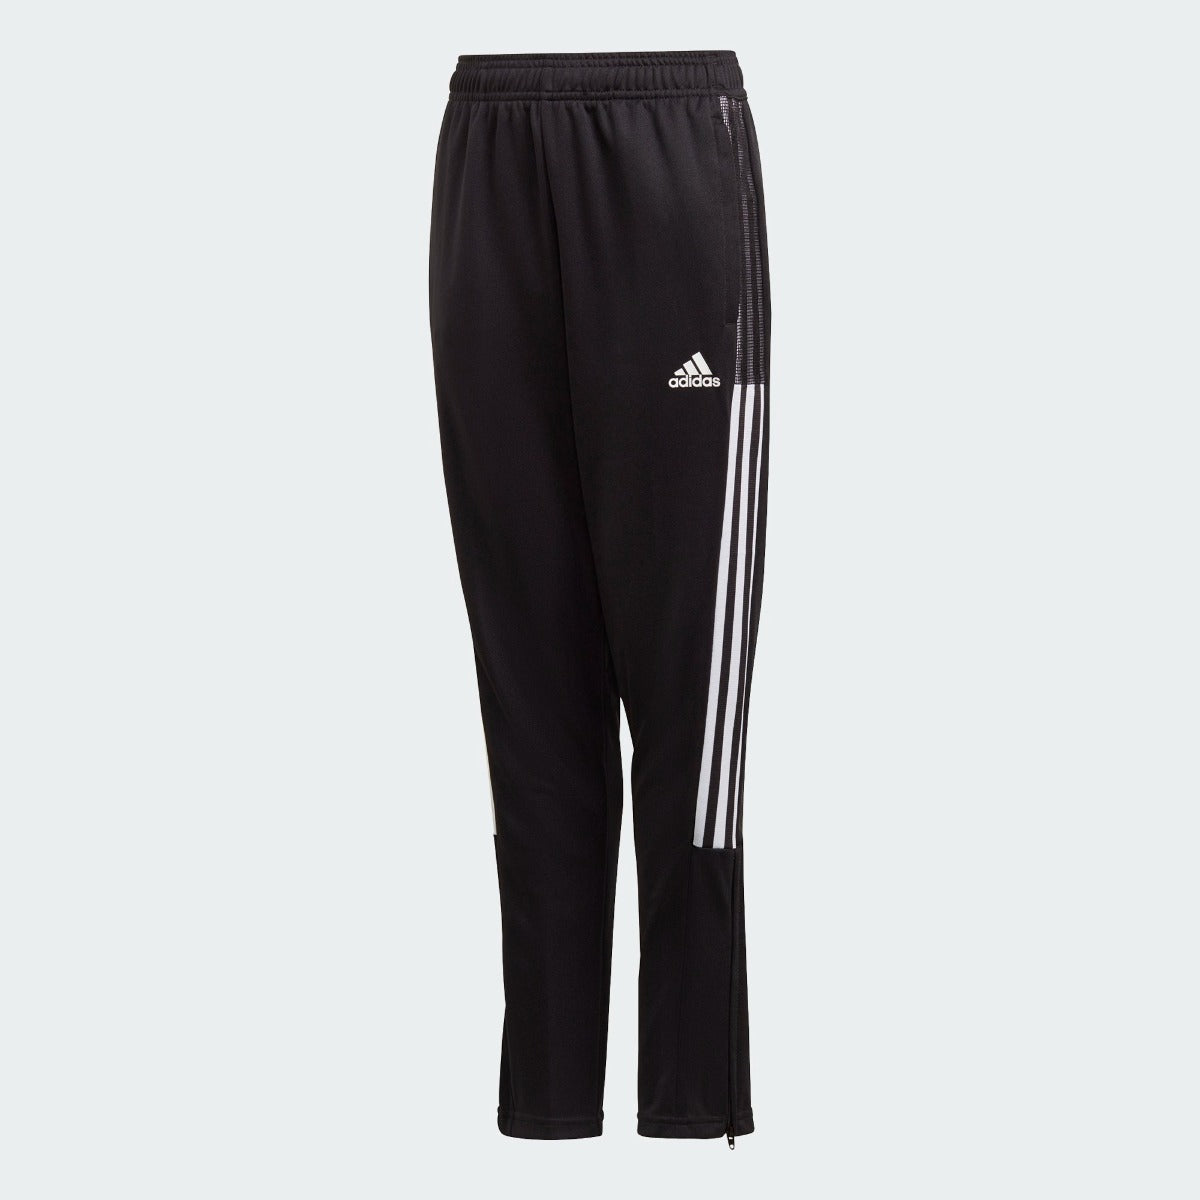 Adidas Youth Tiro 21 Track Pants (Black-White)